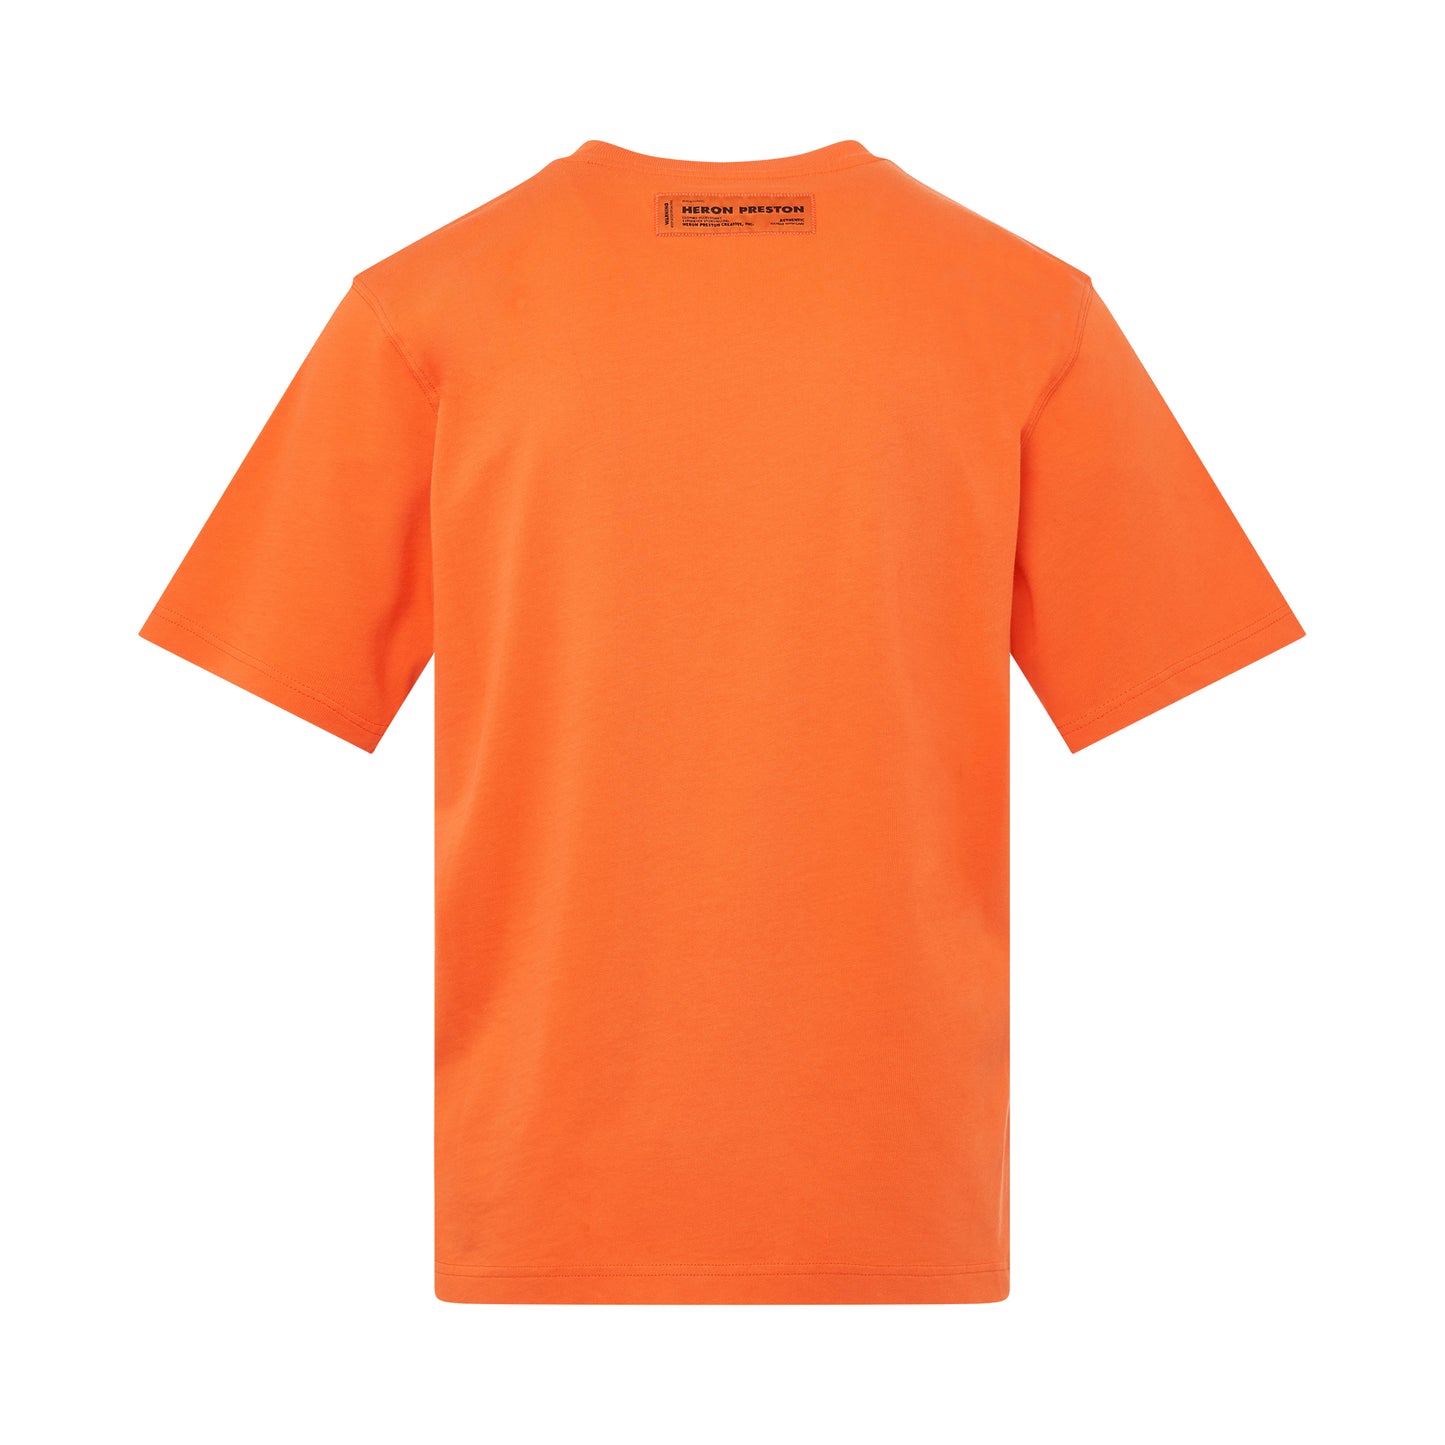 HPNY Embroidered Short Sleeve T-Shirt in Orange/White